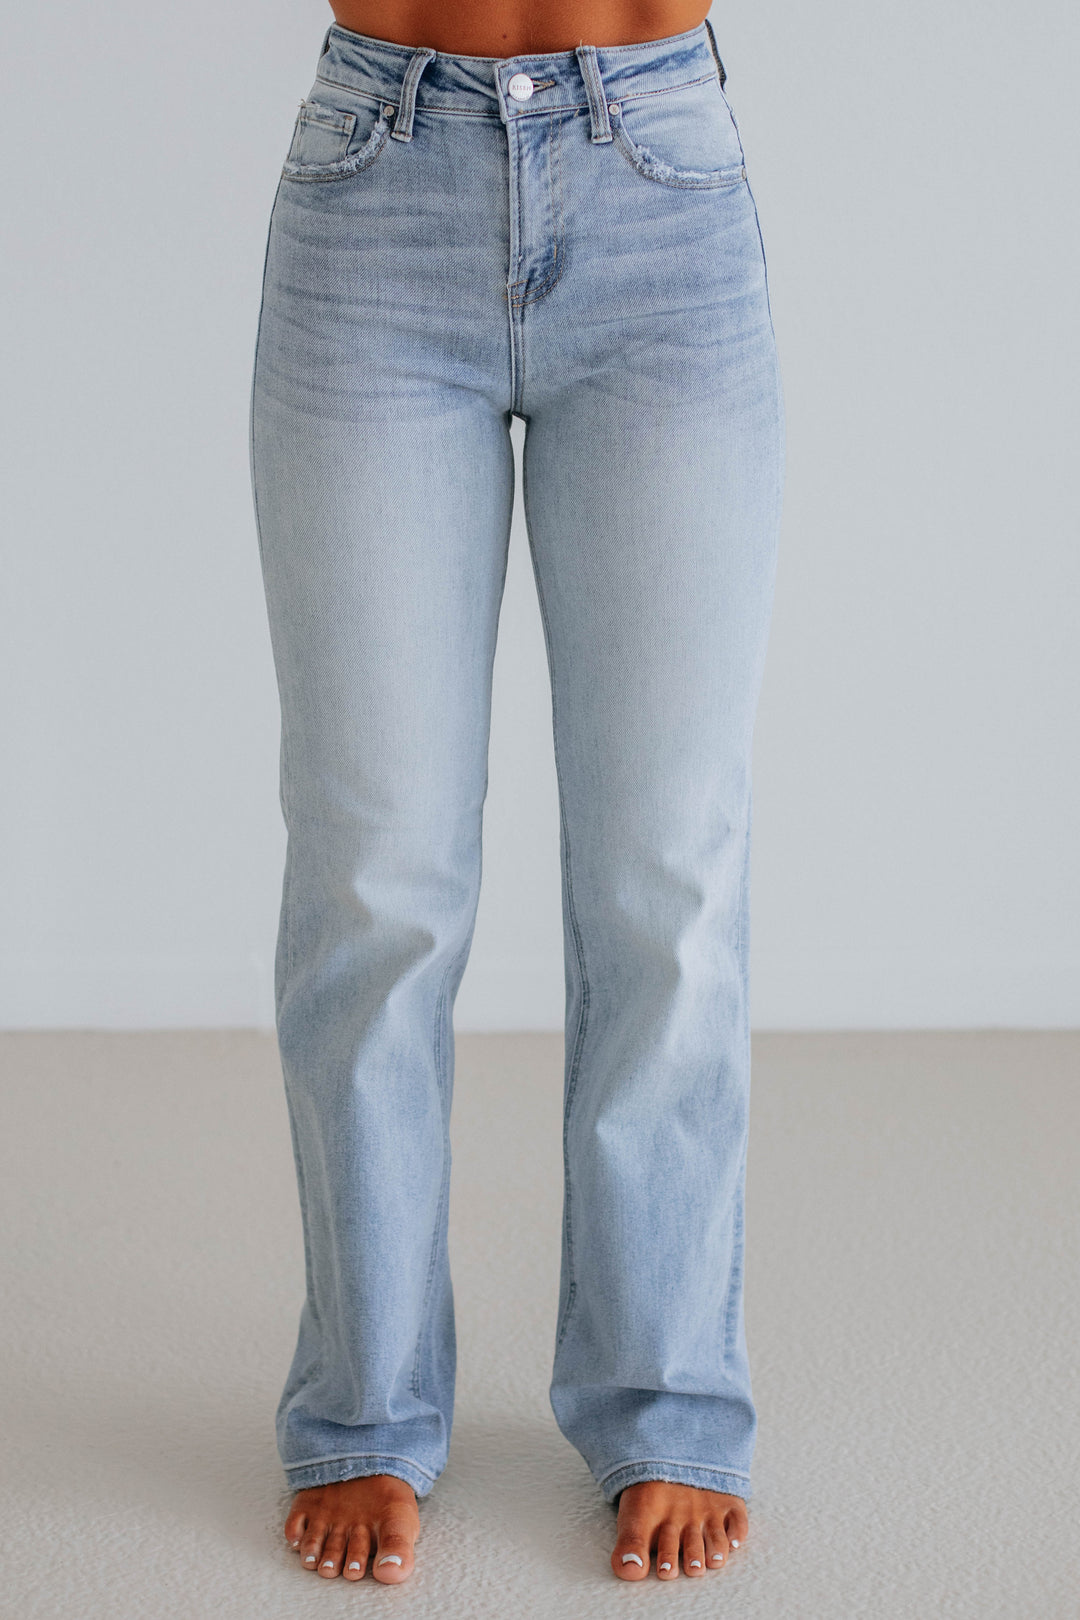 Maranie Risen Jeans